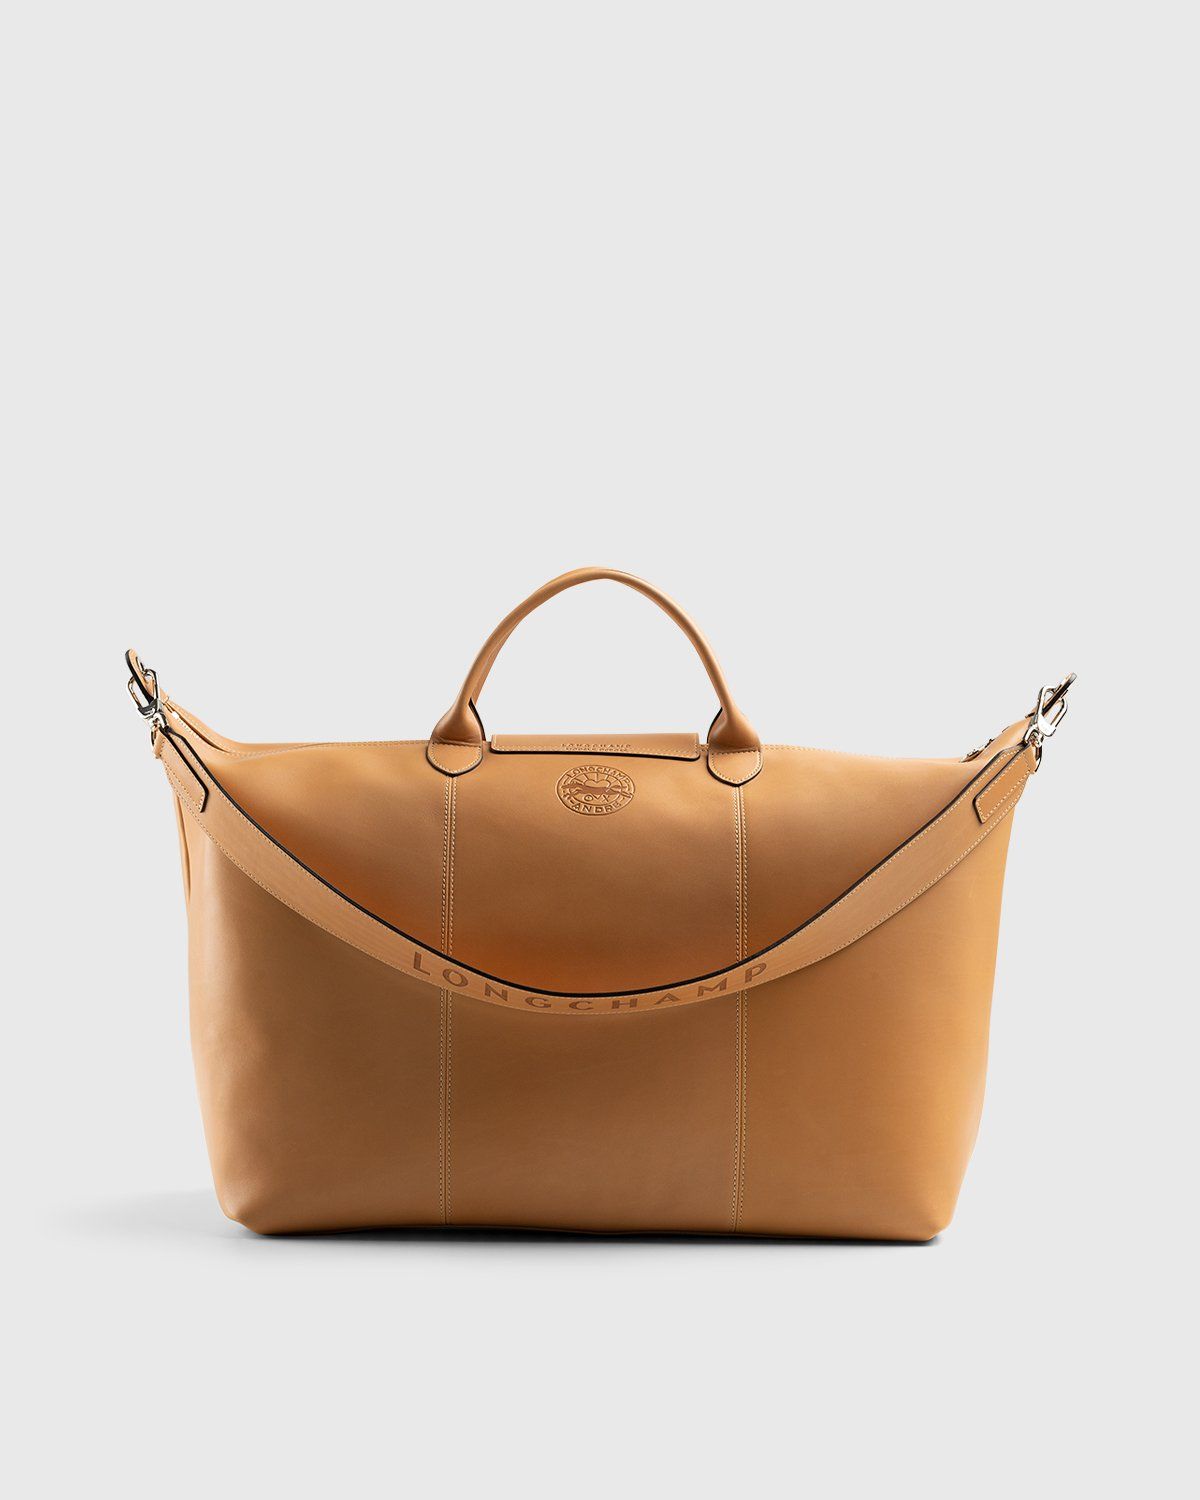 Longchamp Women's Le Pliage Leather Bucket Bag